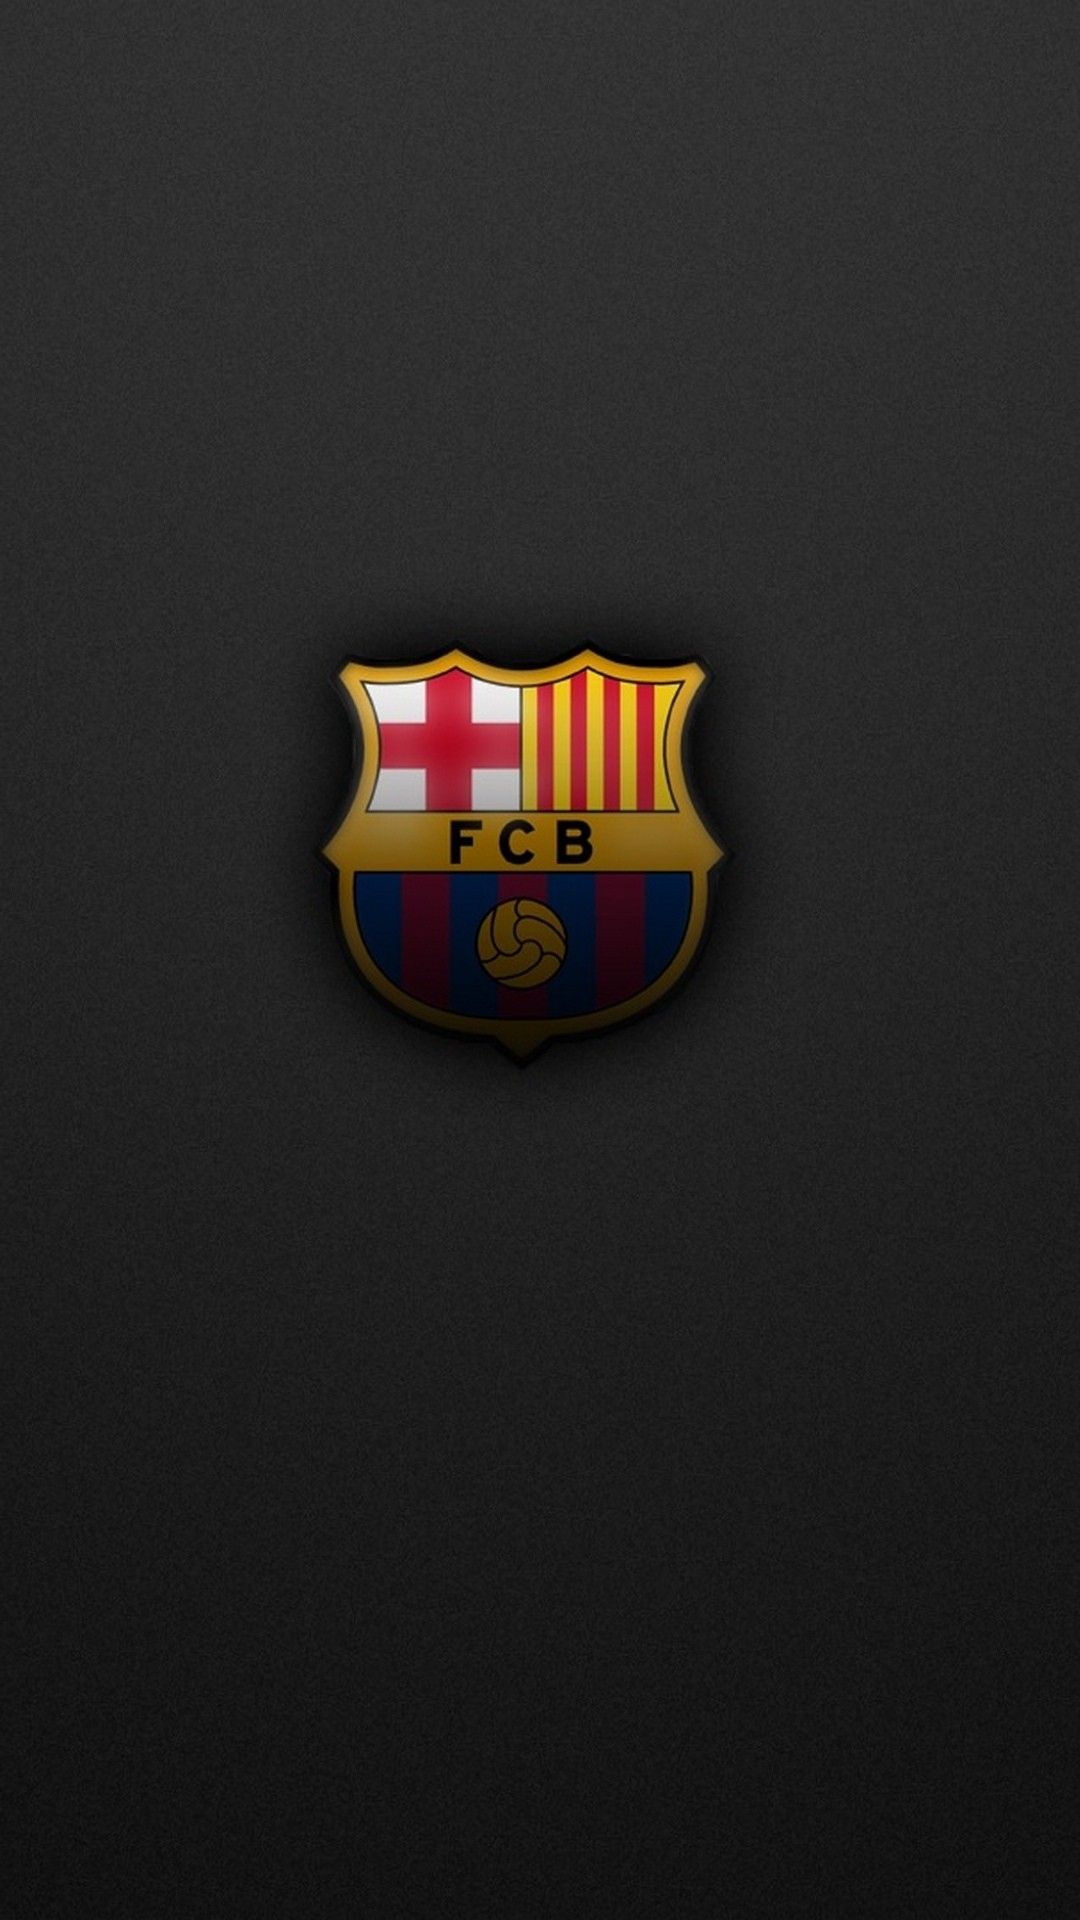 fc barcelona wallpaper iphone,emblem,logo,symbol,badge,illustration